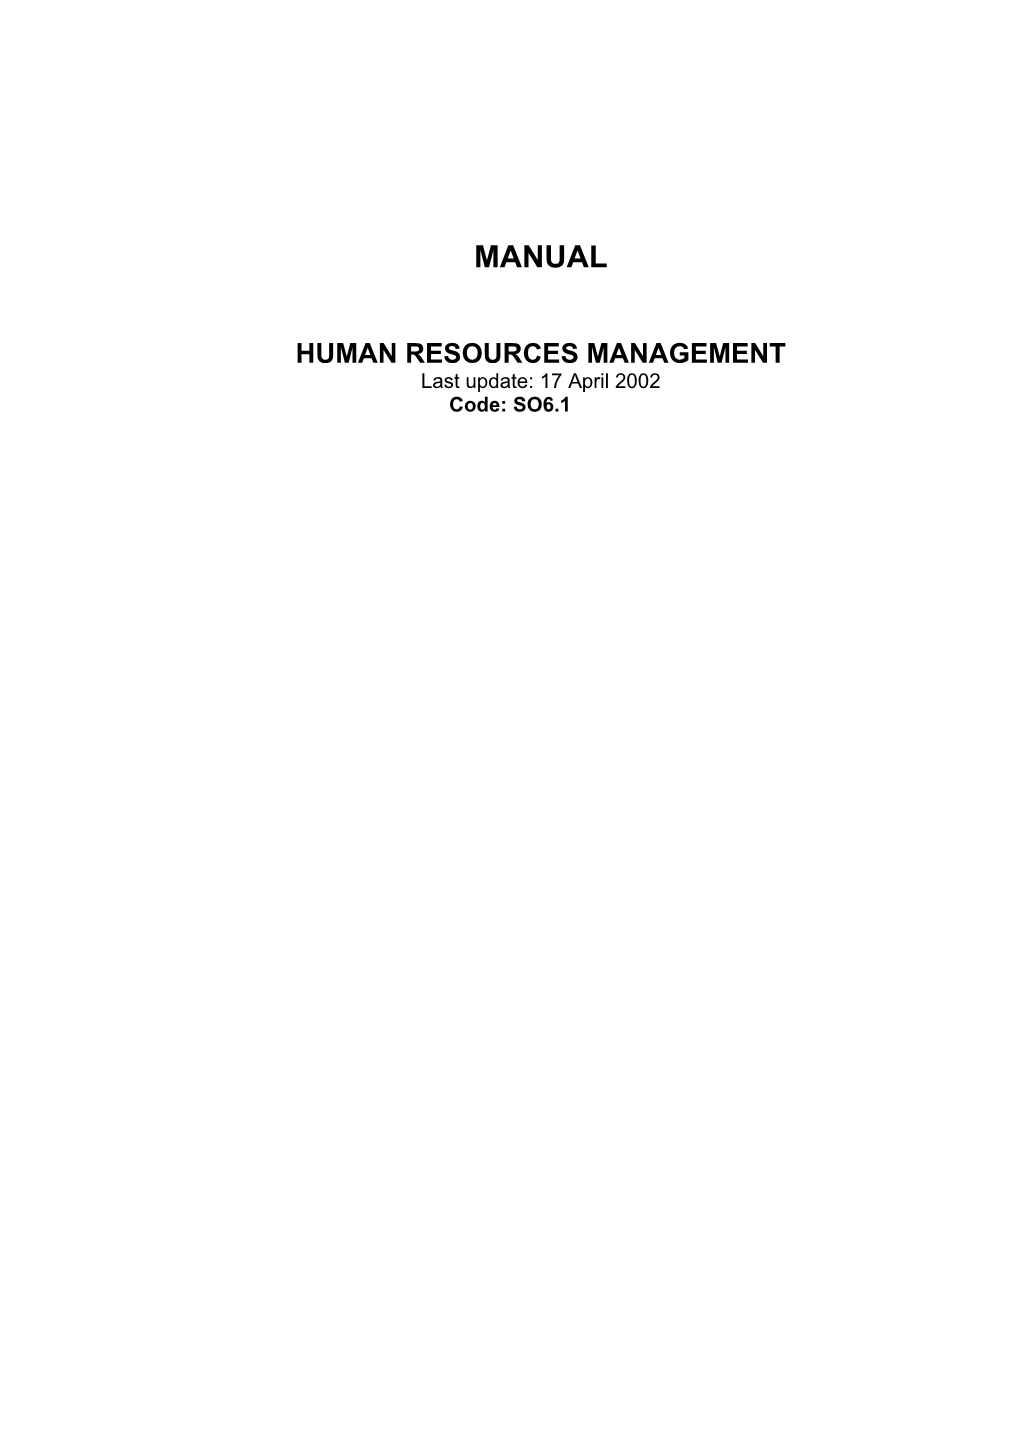 Manual Human Resource Management